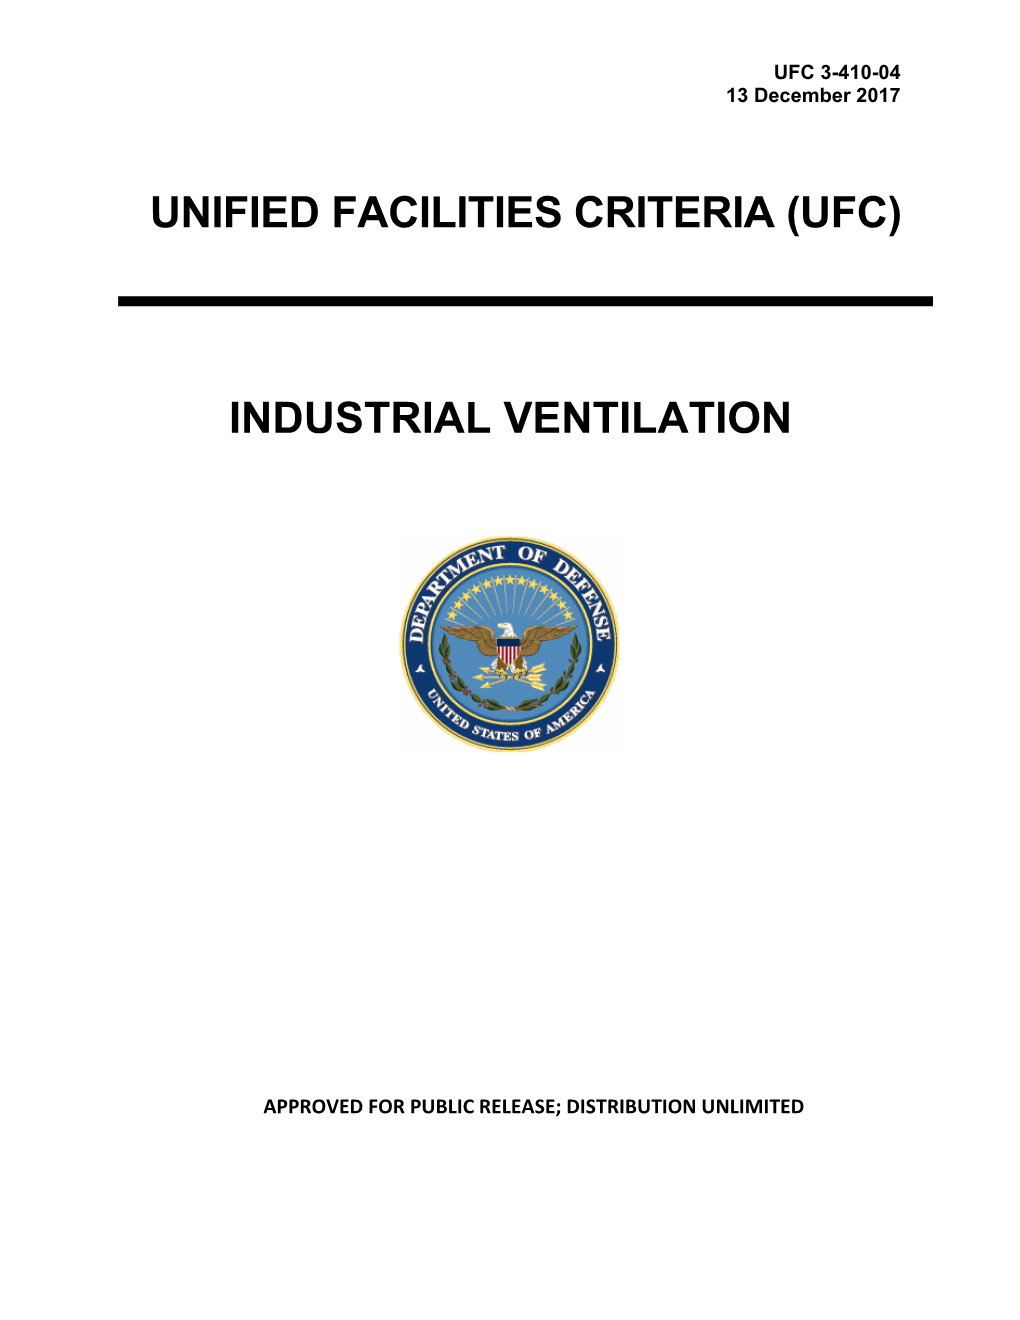 UFC 3-410-06 Industrial Ventalation